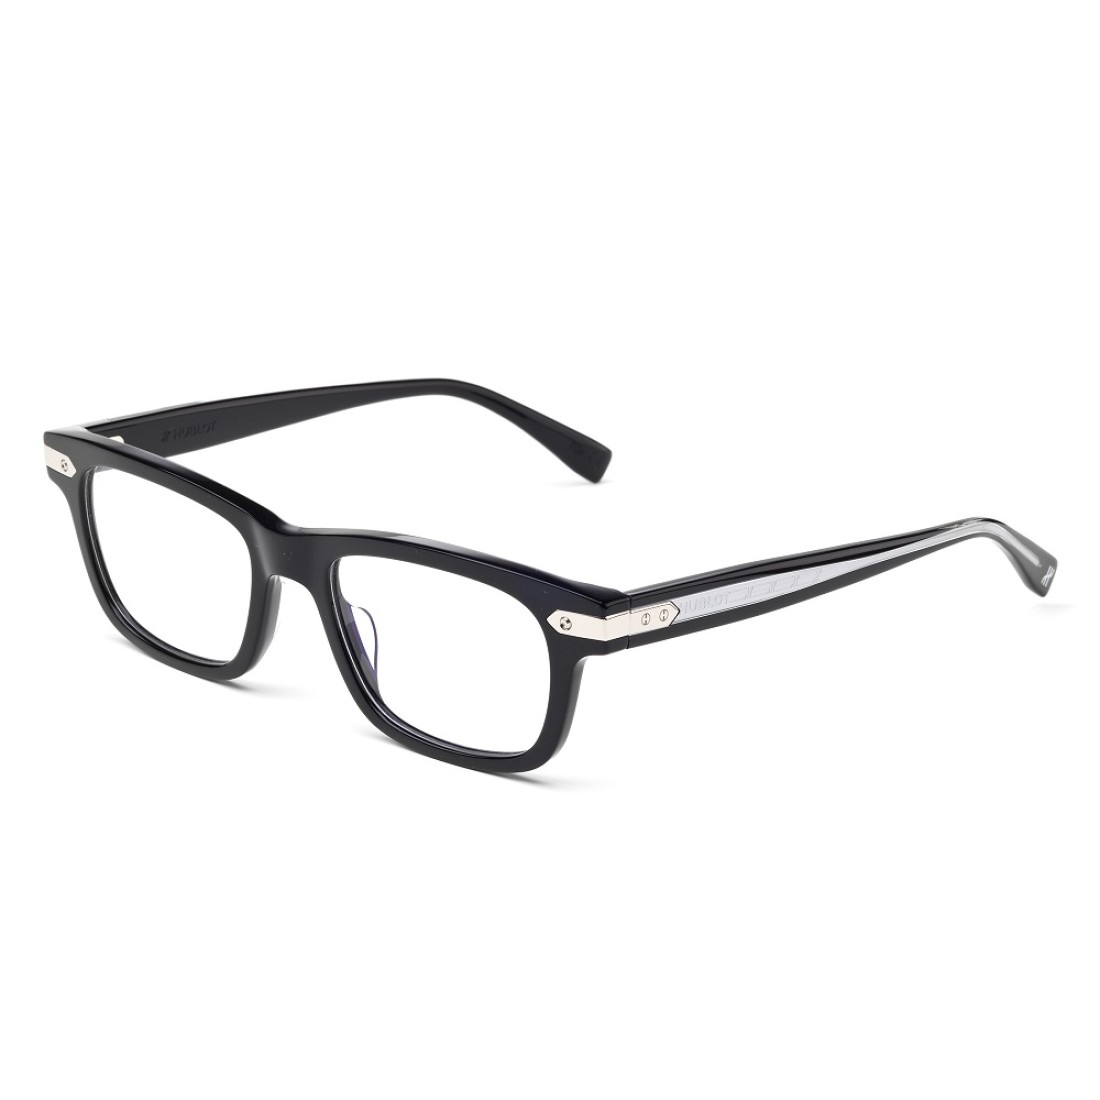 Hublot HUB LICEN H027O - H027O.009.075 Black Silver | Eyeglasses Man